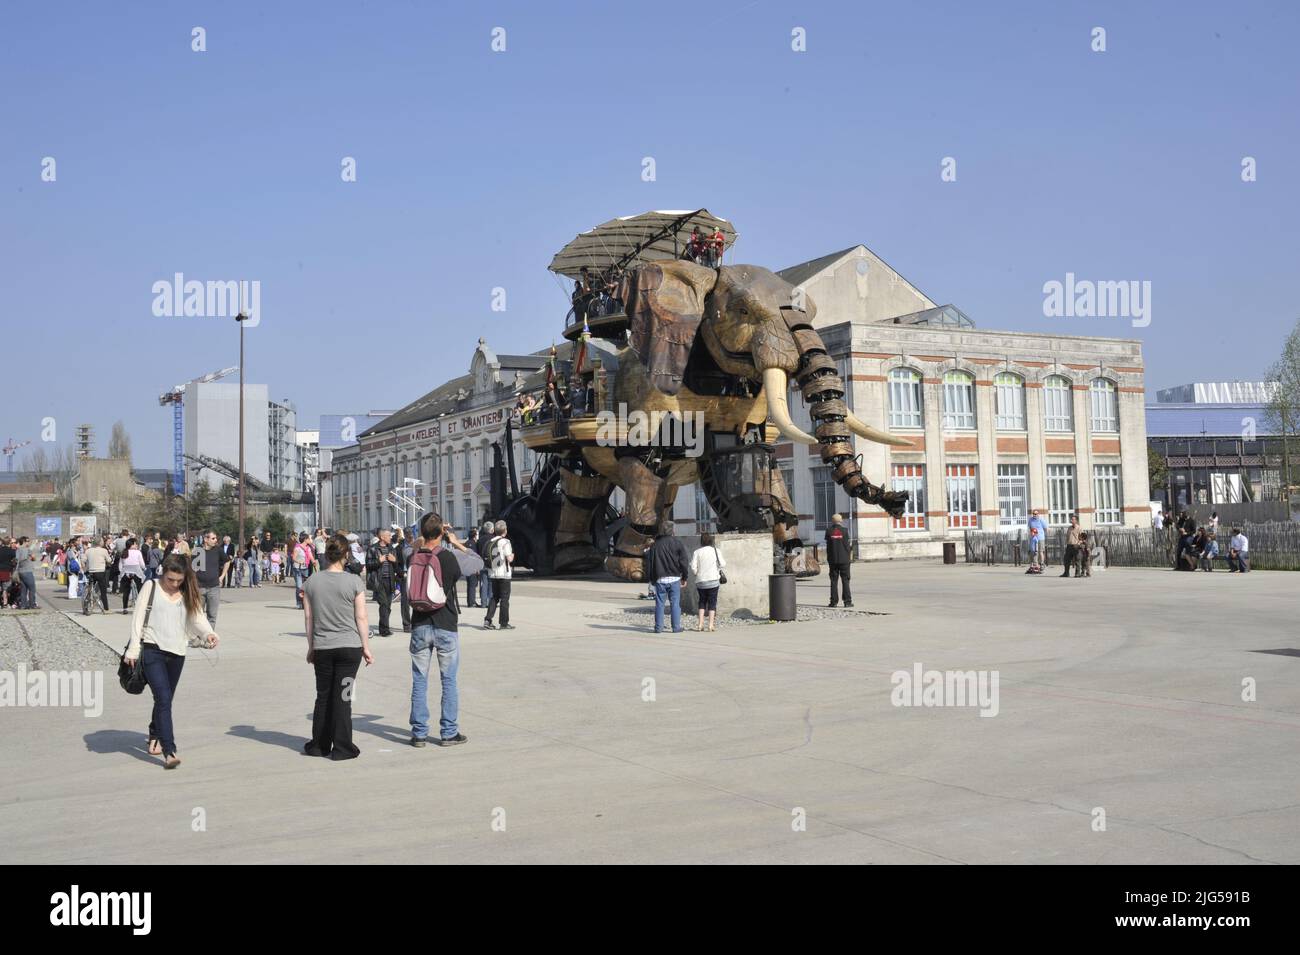 mechanical elephant in Nantes, France Stock Photo